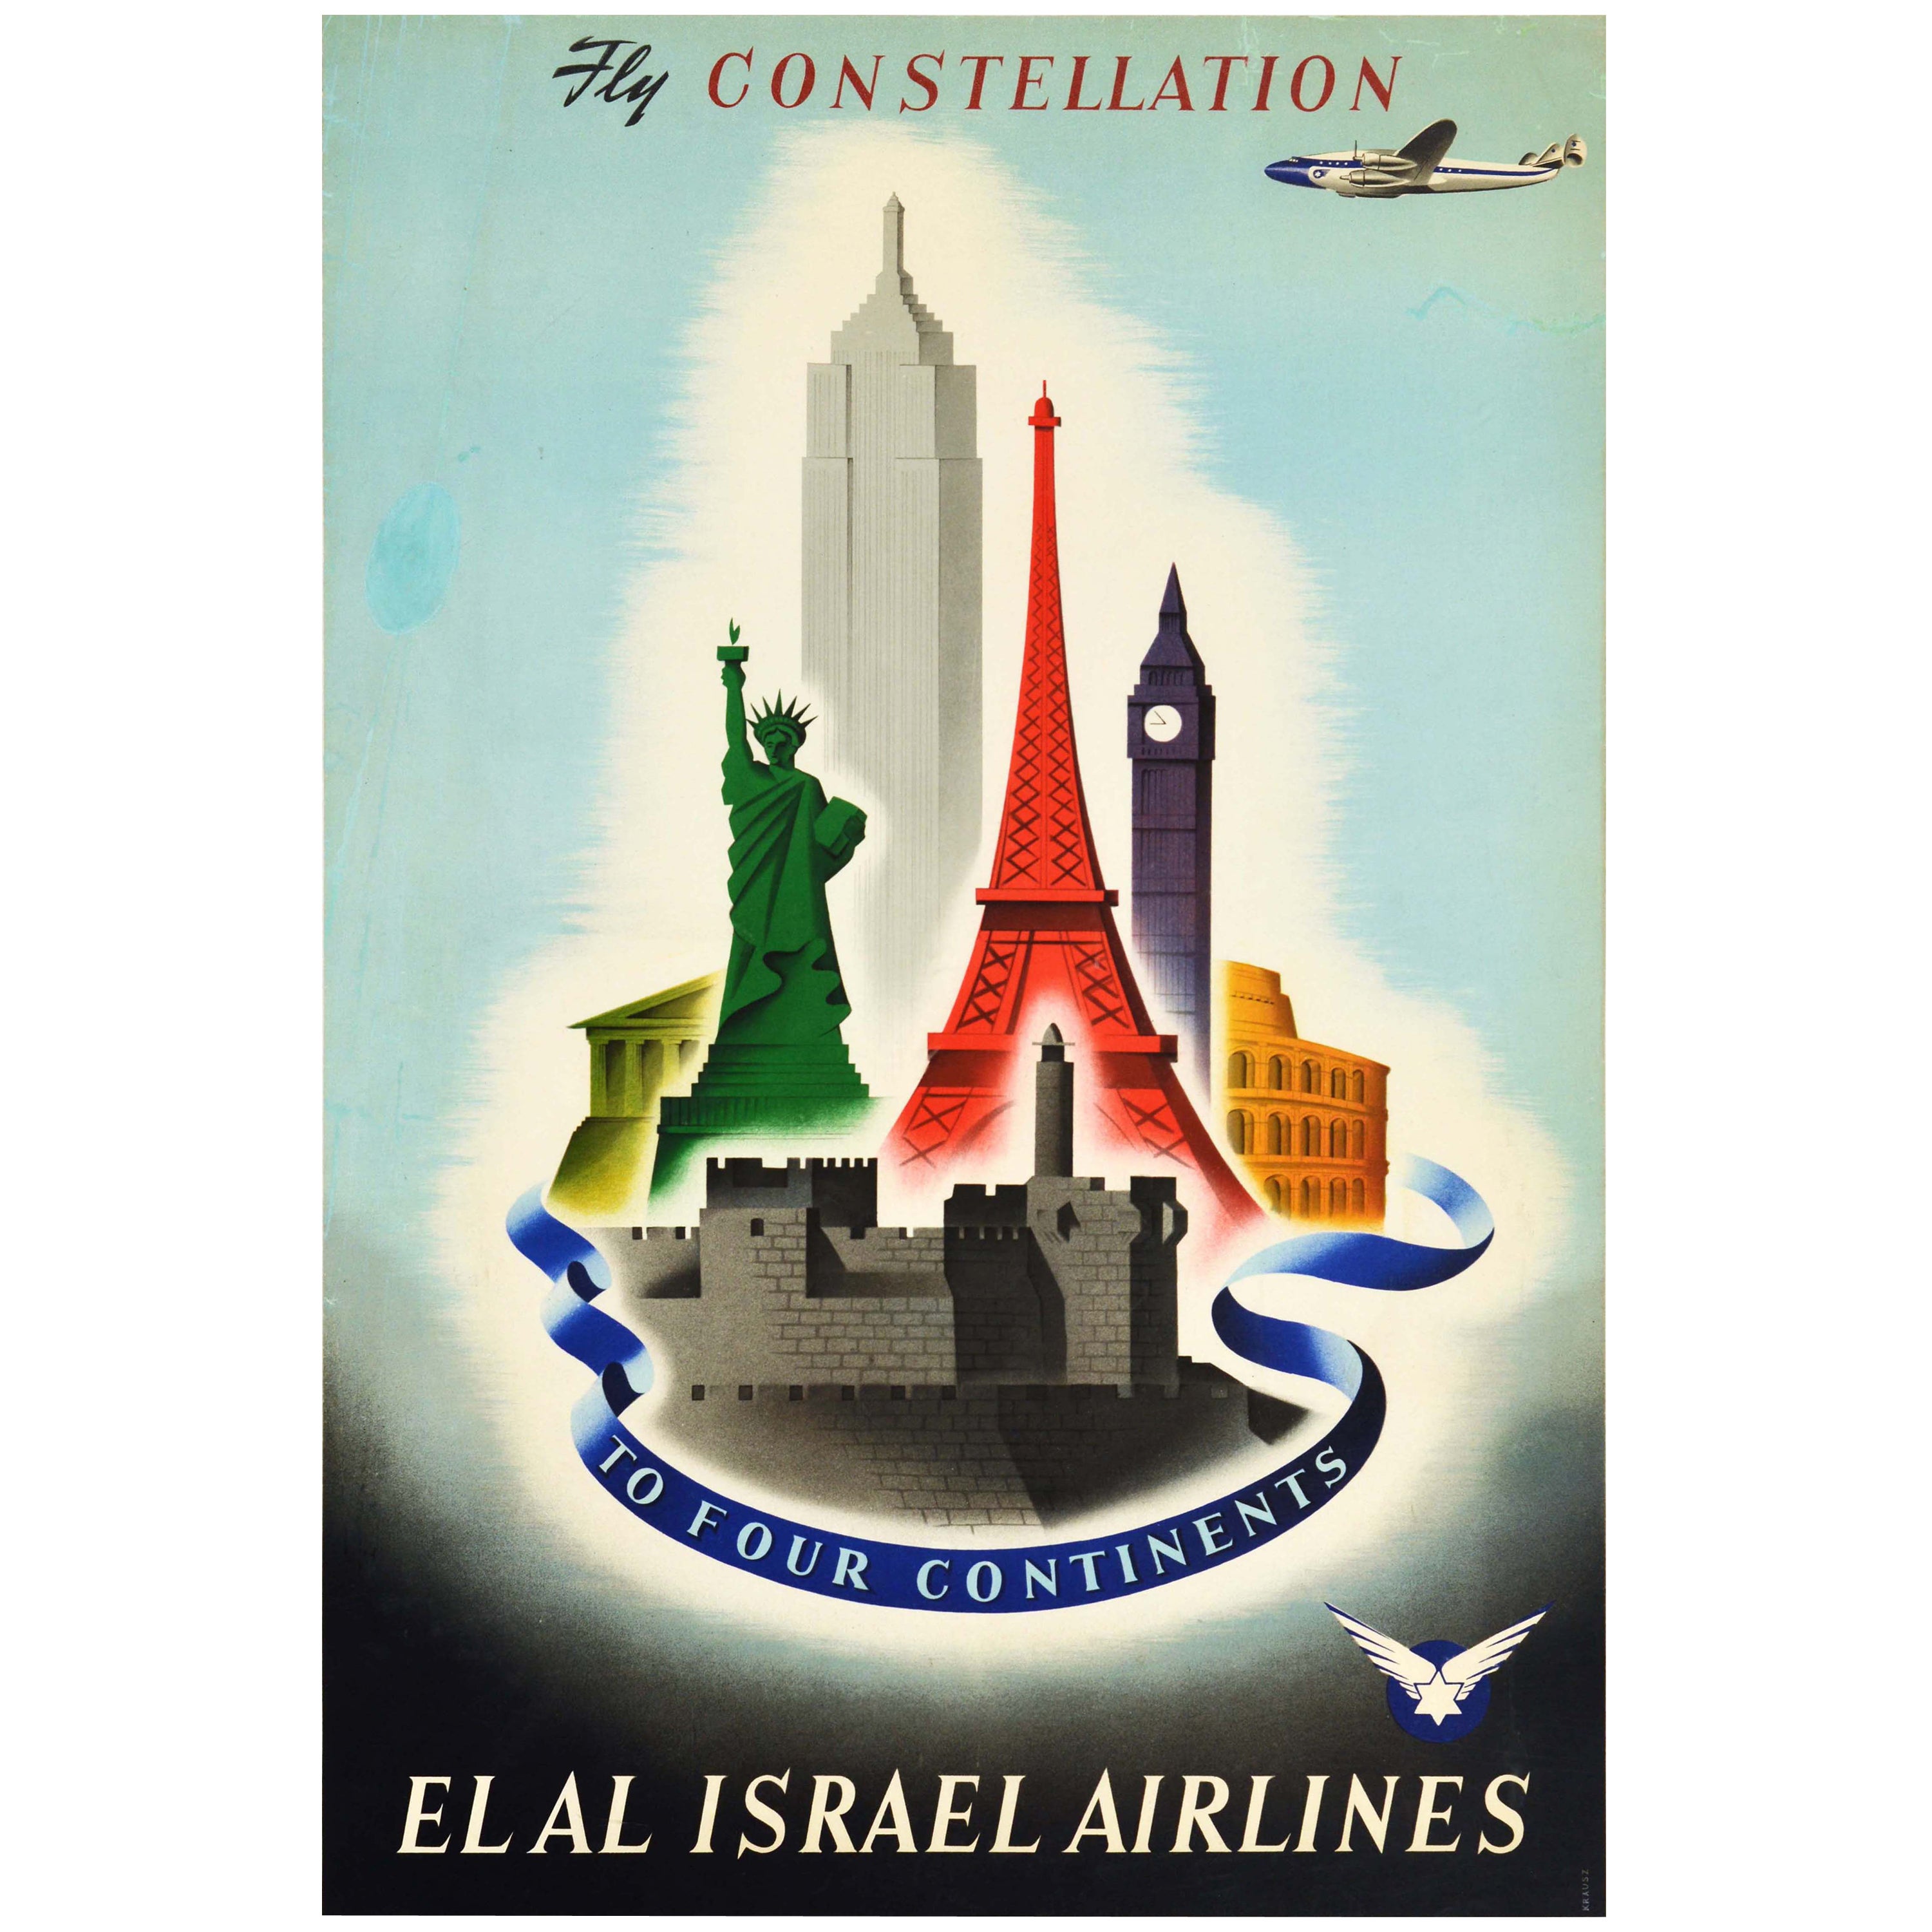 Original Vintage Poster El Al Israel Airlines Fly Constellation Four Continents